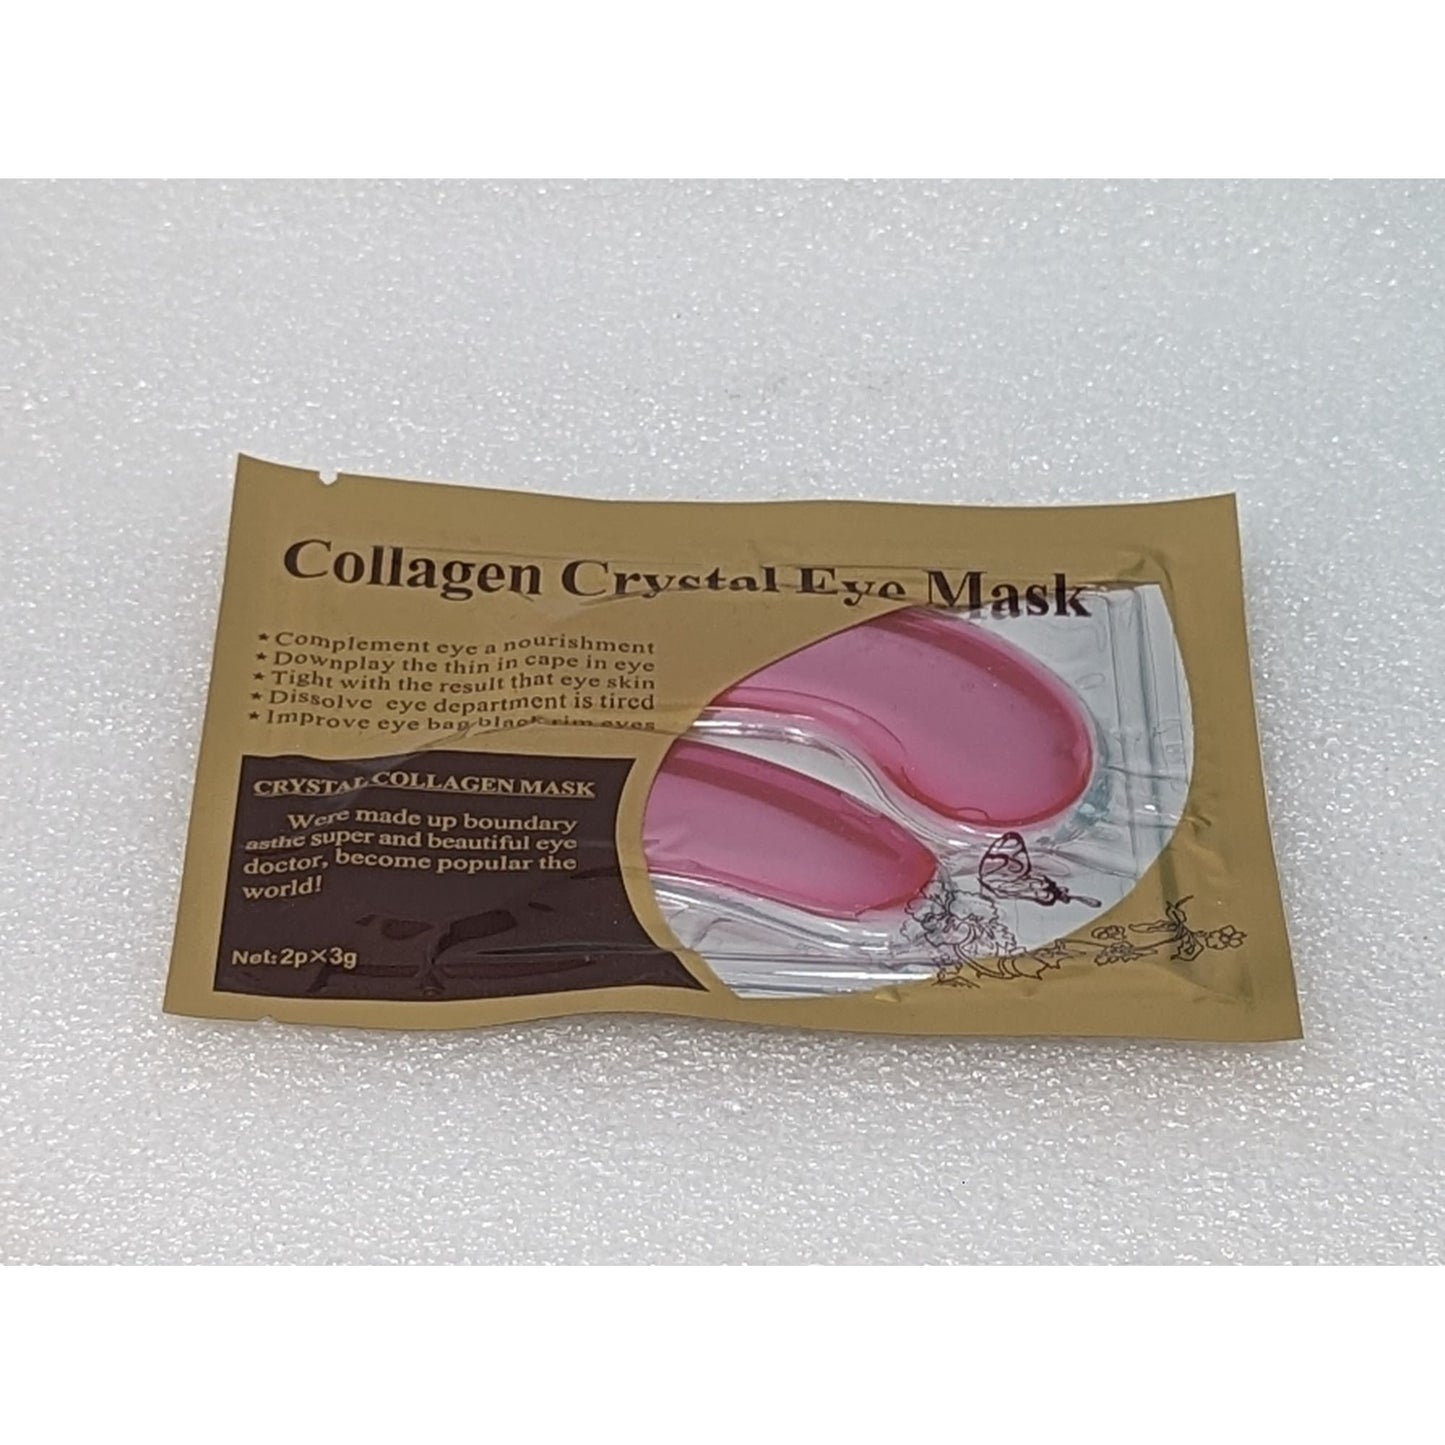 Collagen Crystal Eye Mask 2p X 3g